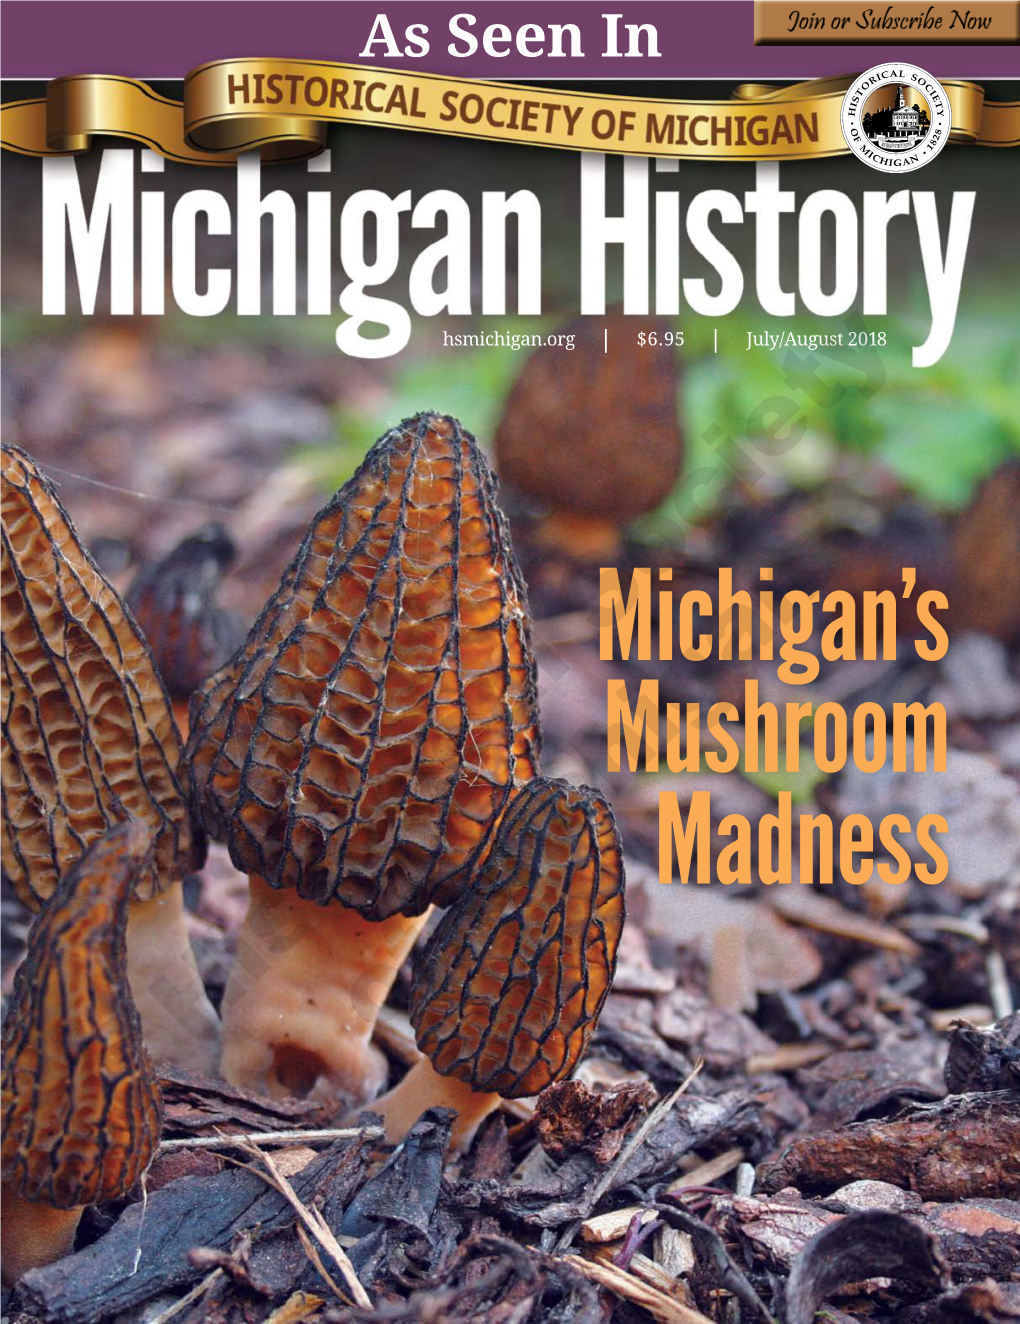 © 2018 Historical Society of Michigan